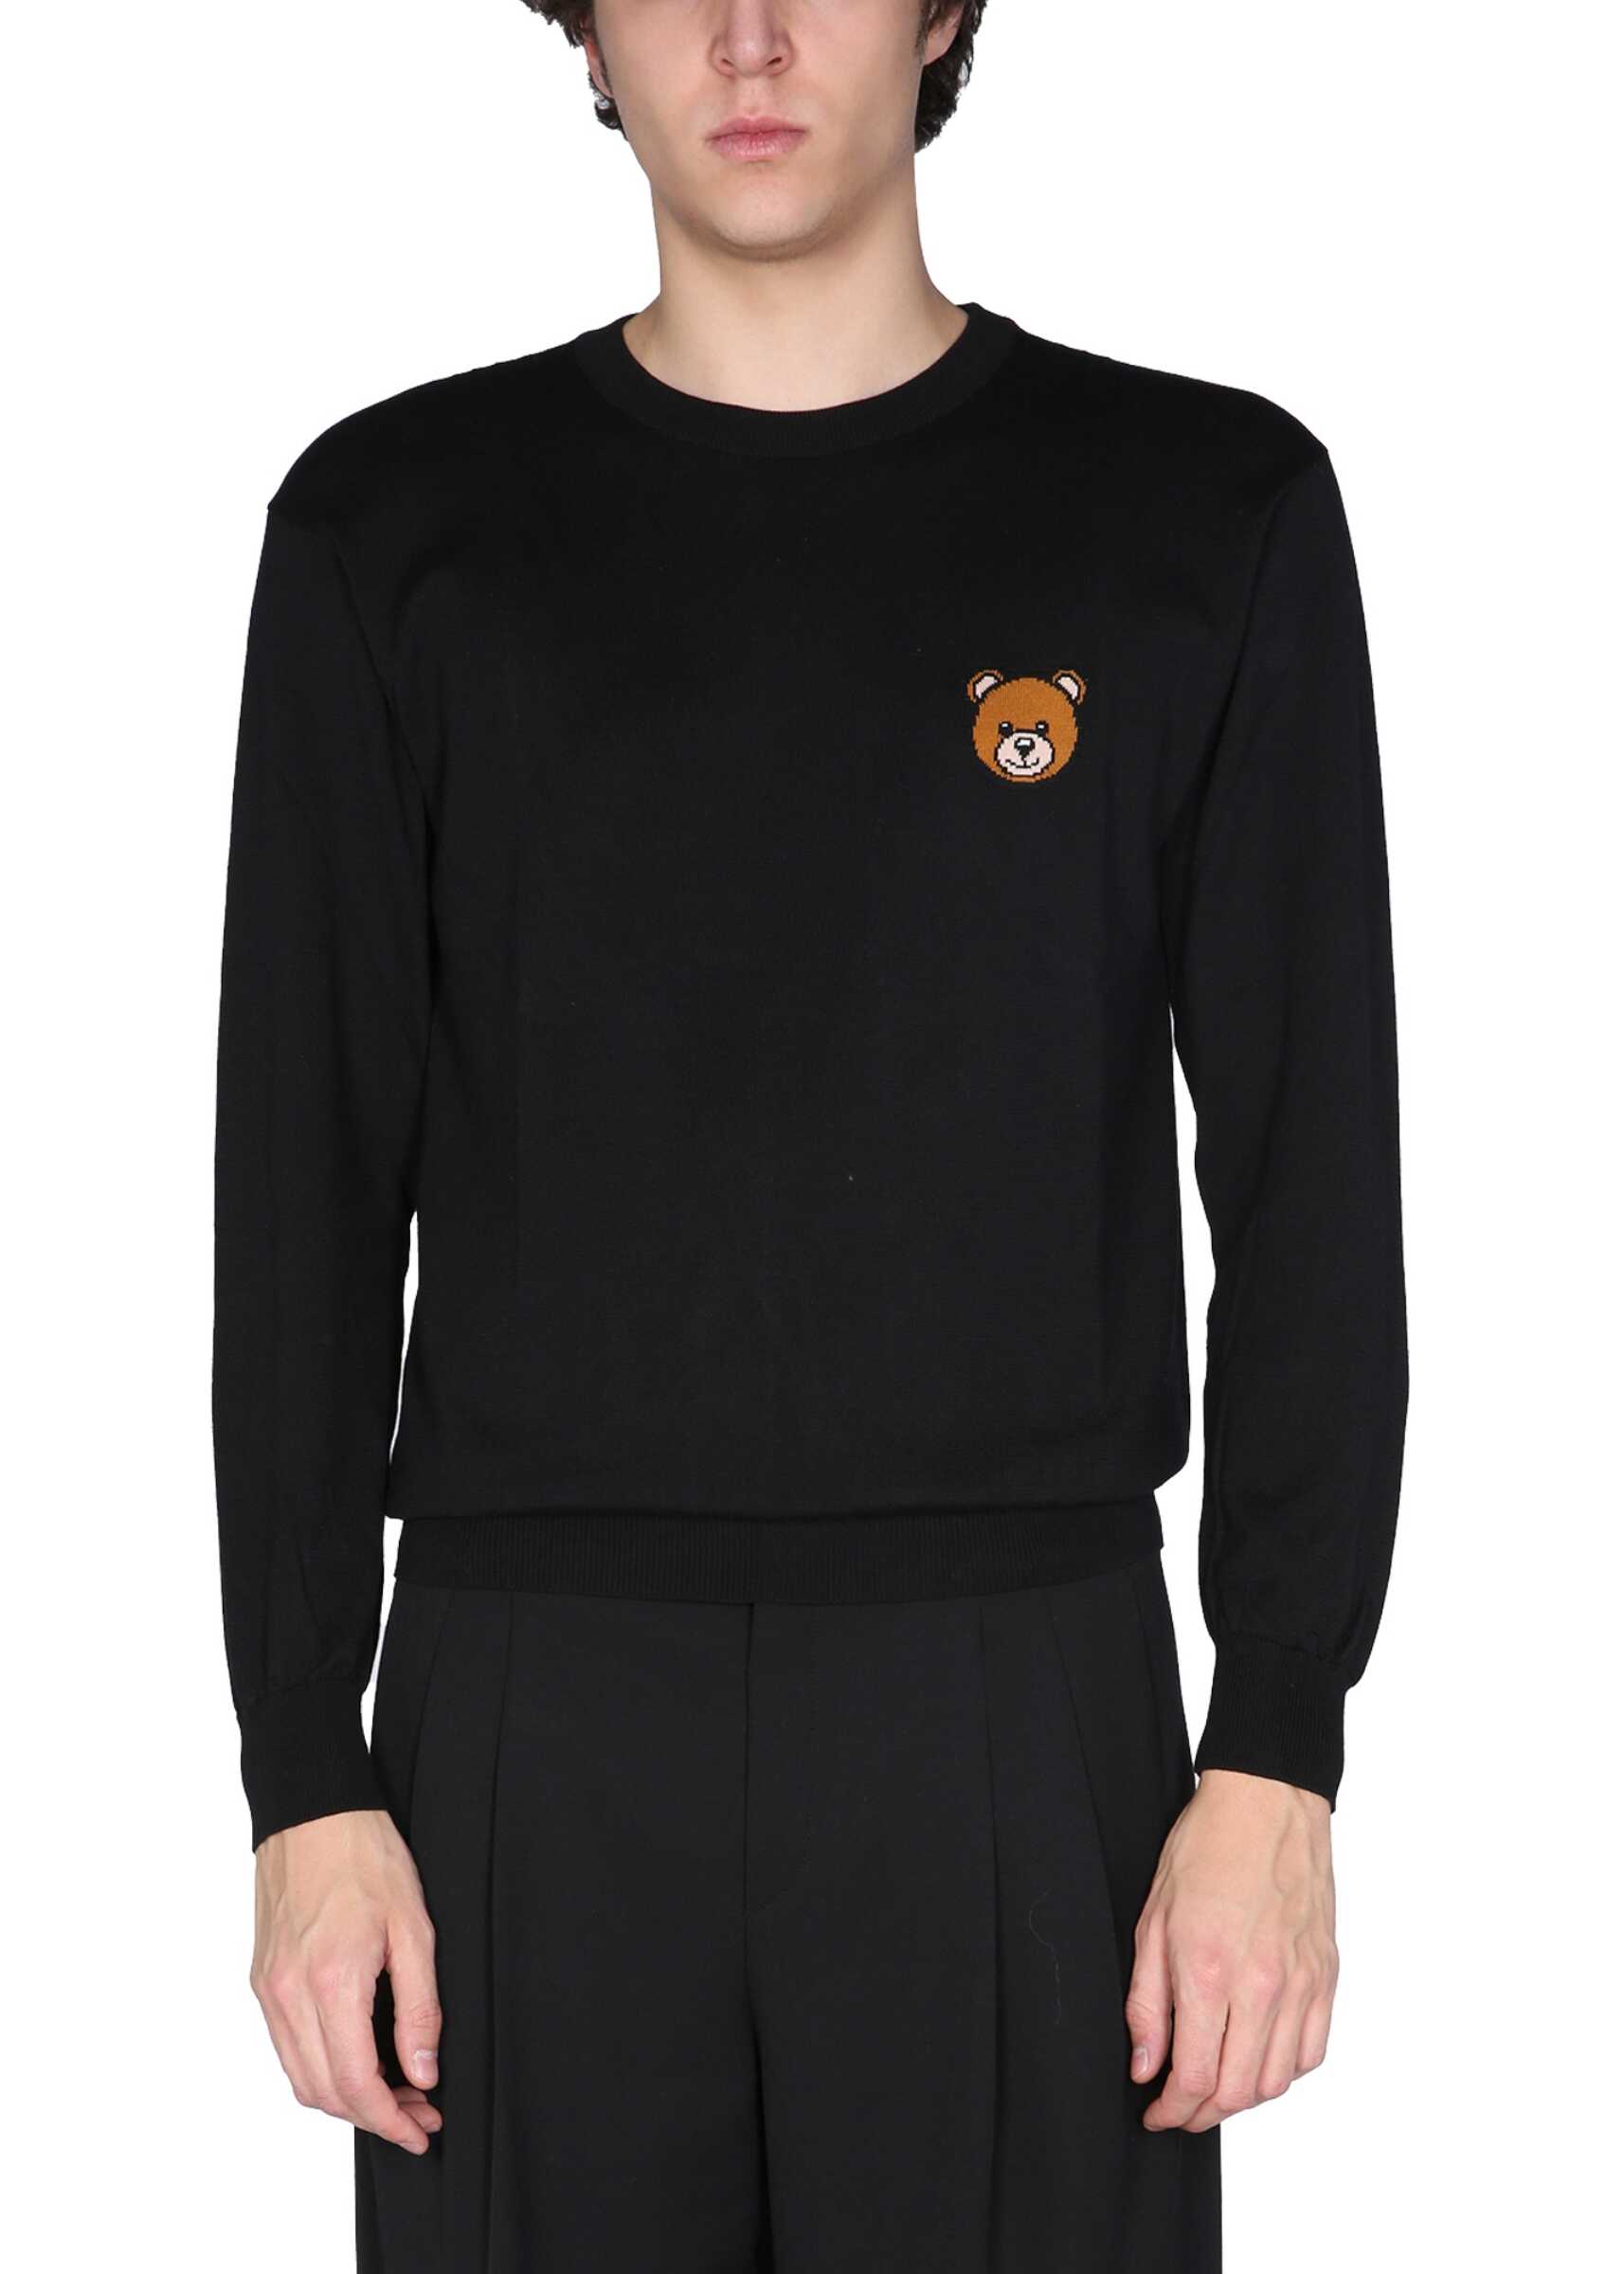 Moschino "Teddy Bear" Sweater 09022002_0555 BLACK